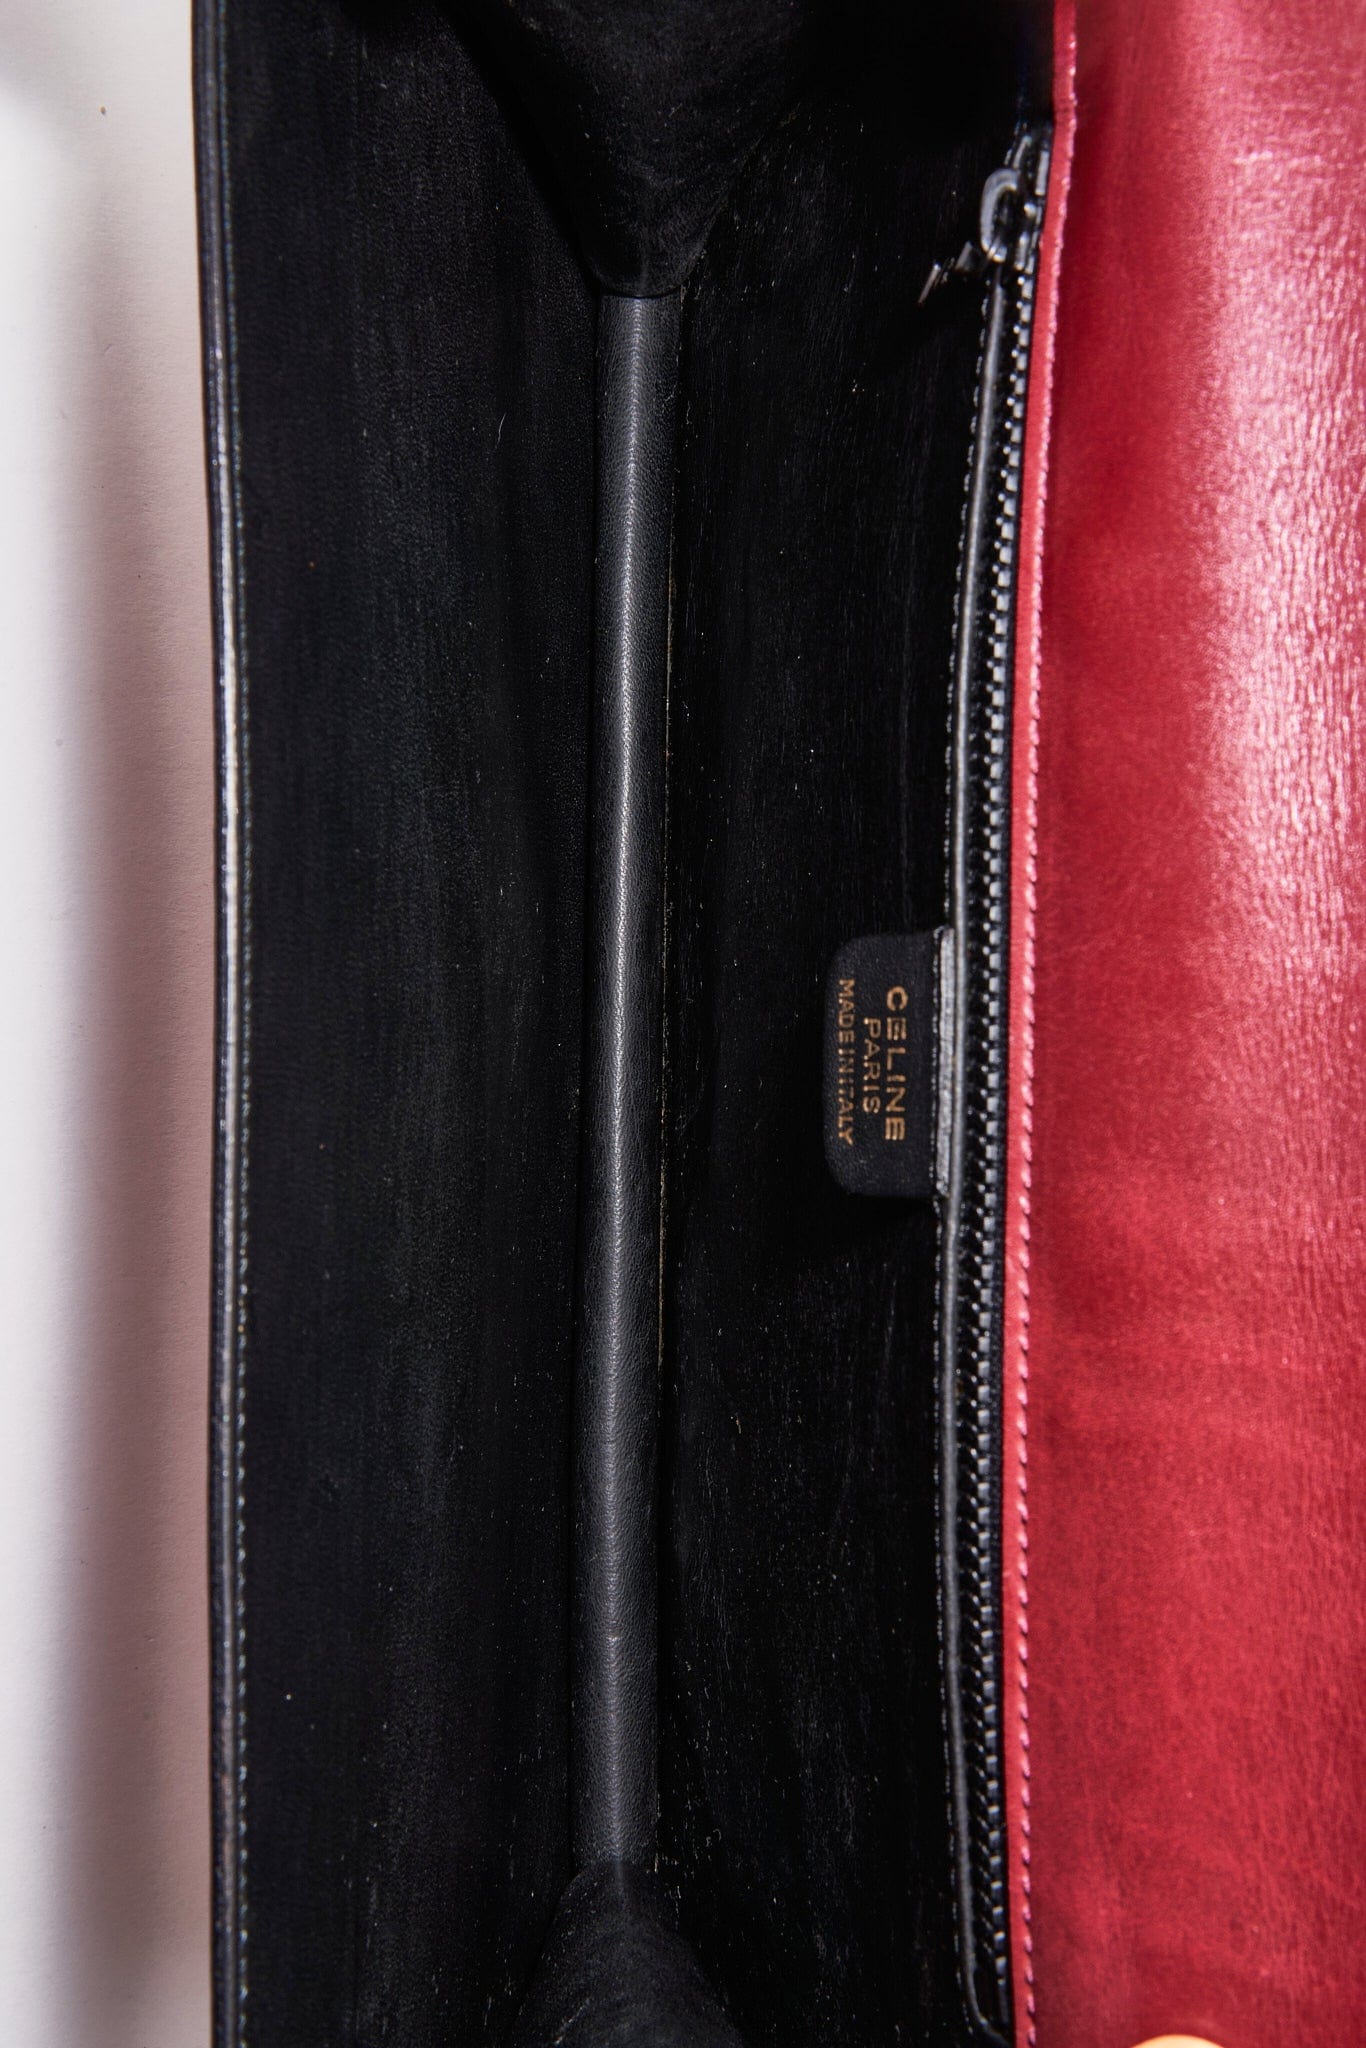 Vintage Celine Bag With Chain - Burgundy Leather